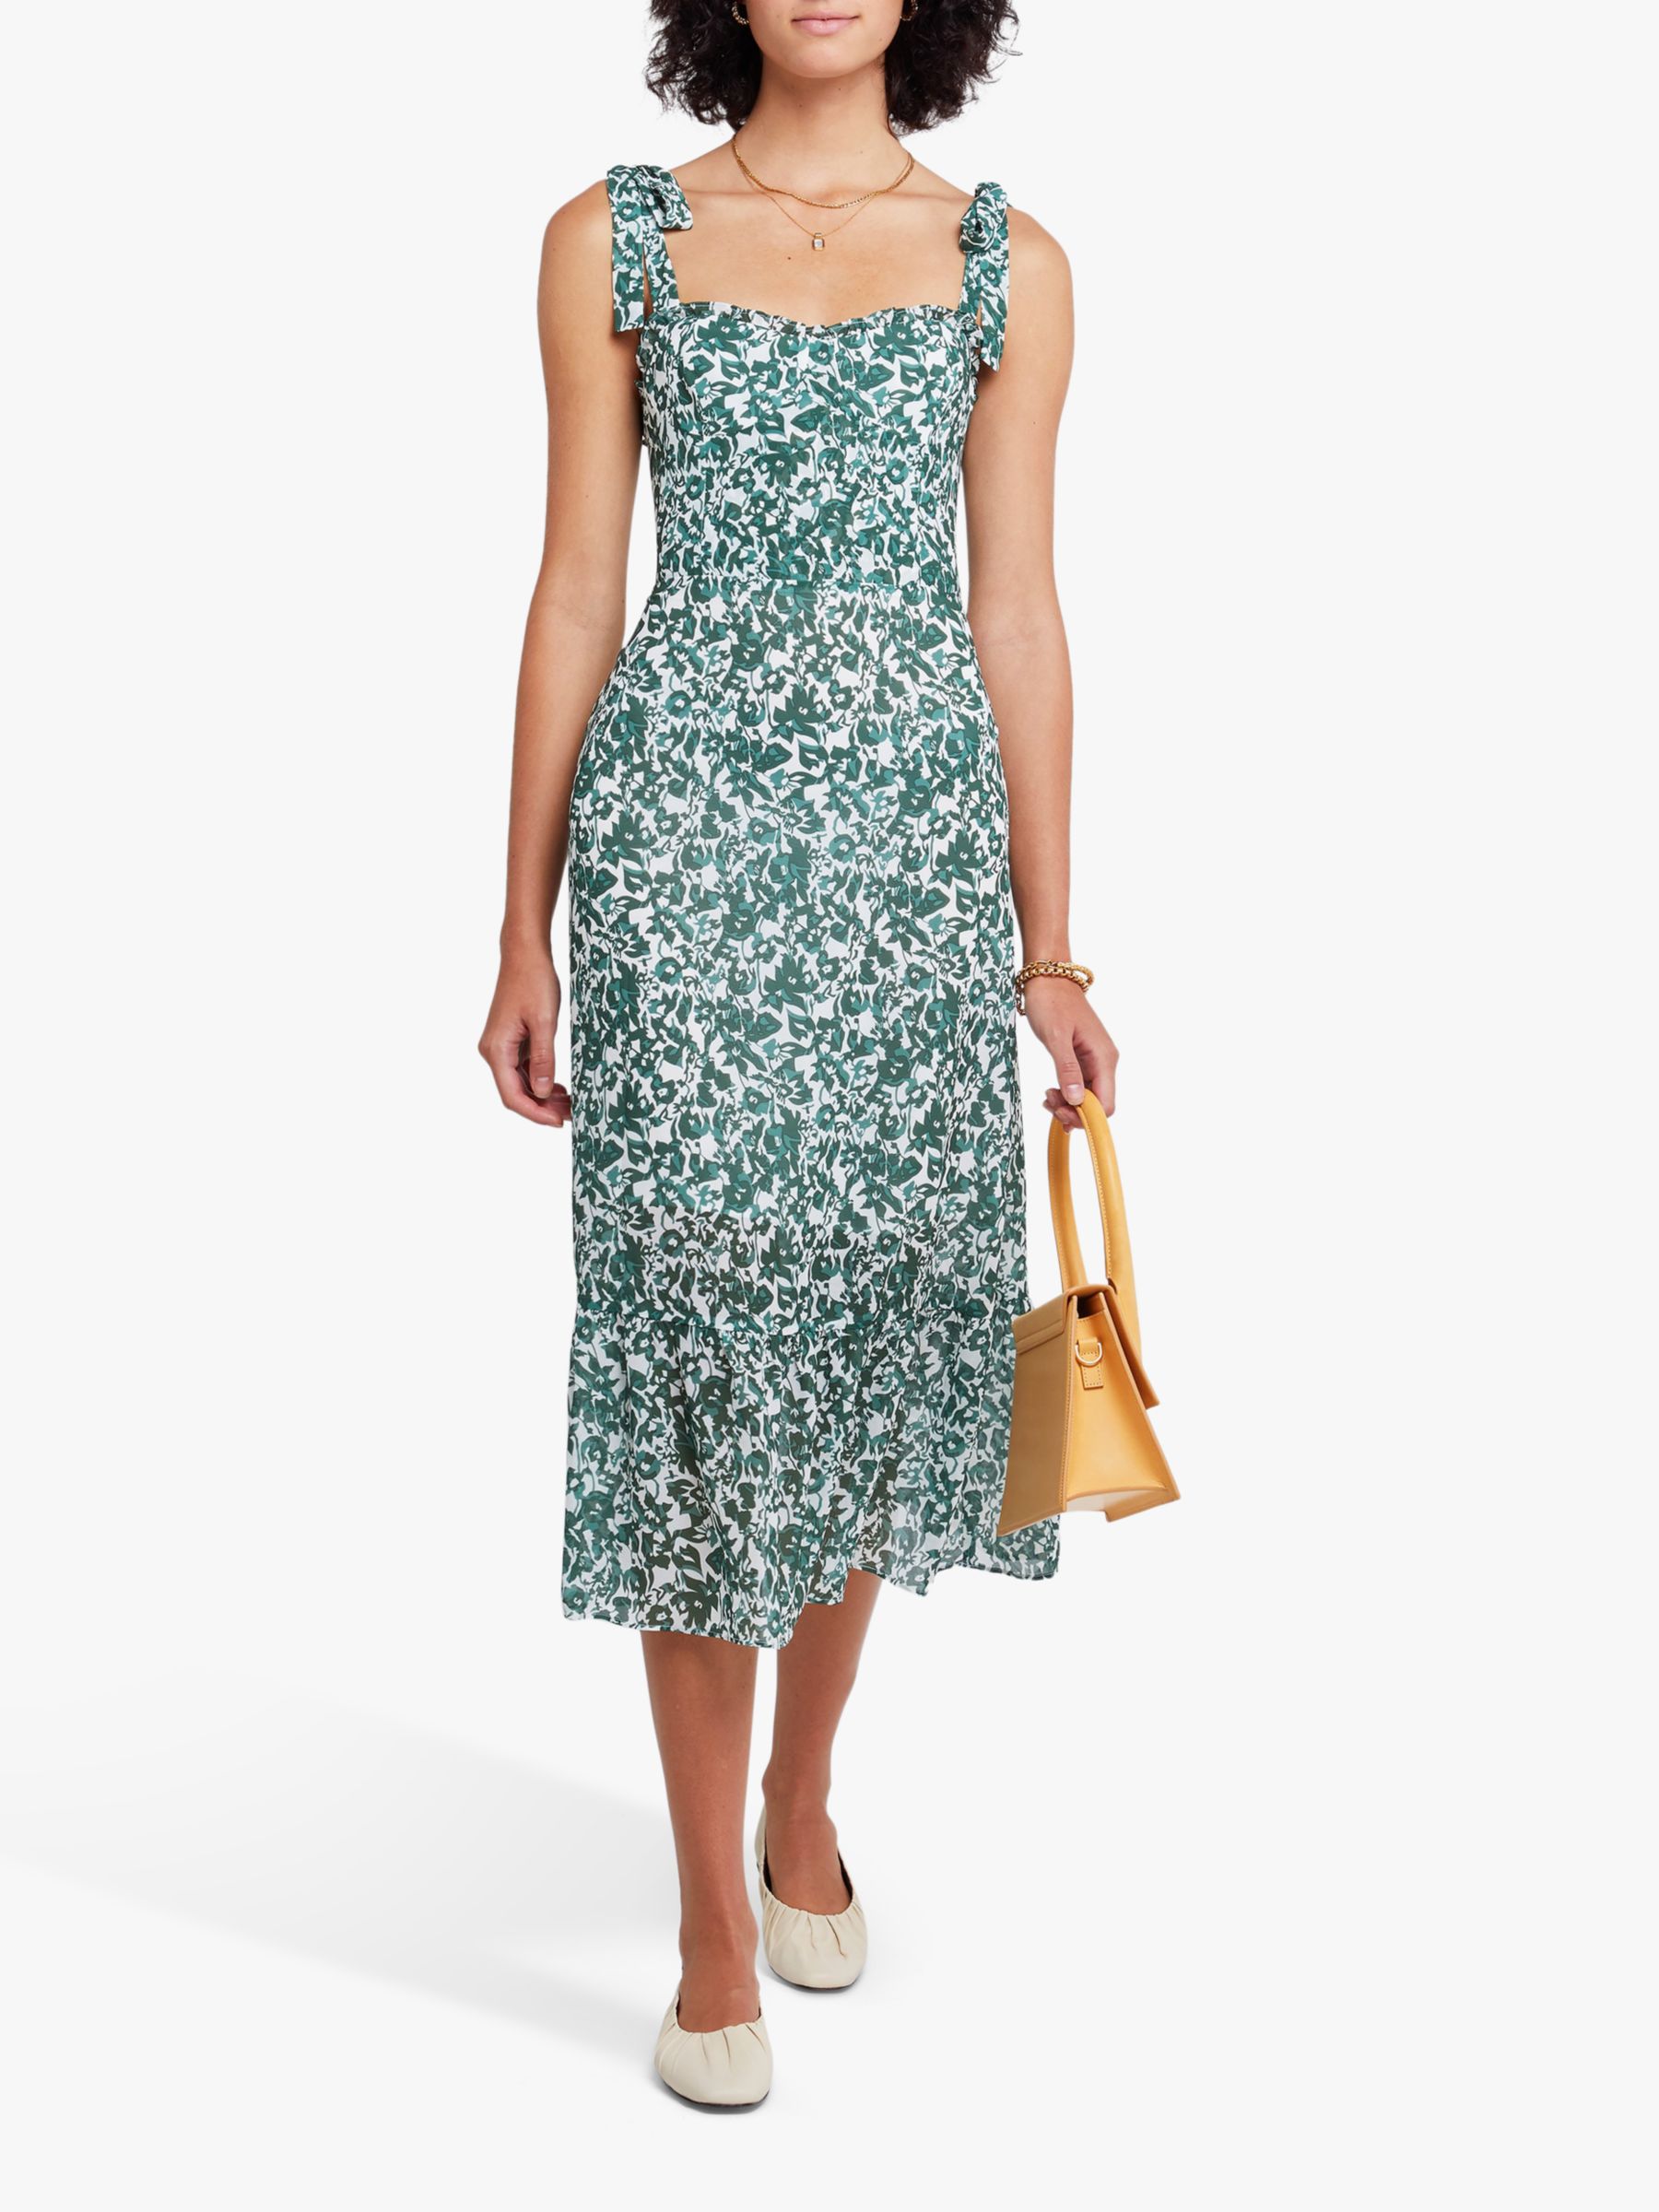 o.p.t Toile de Jouy Floral Print Sleeveless Midi Dress, Green, 12